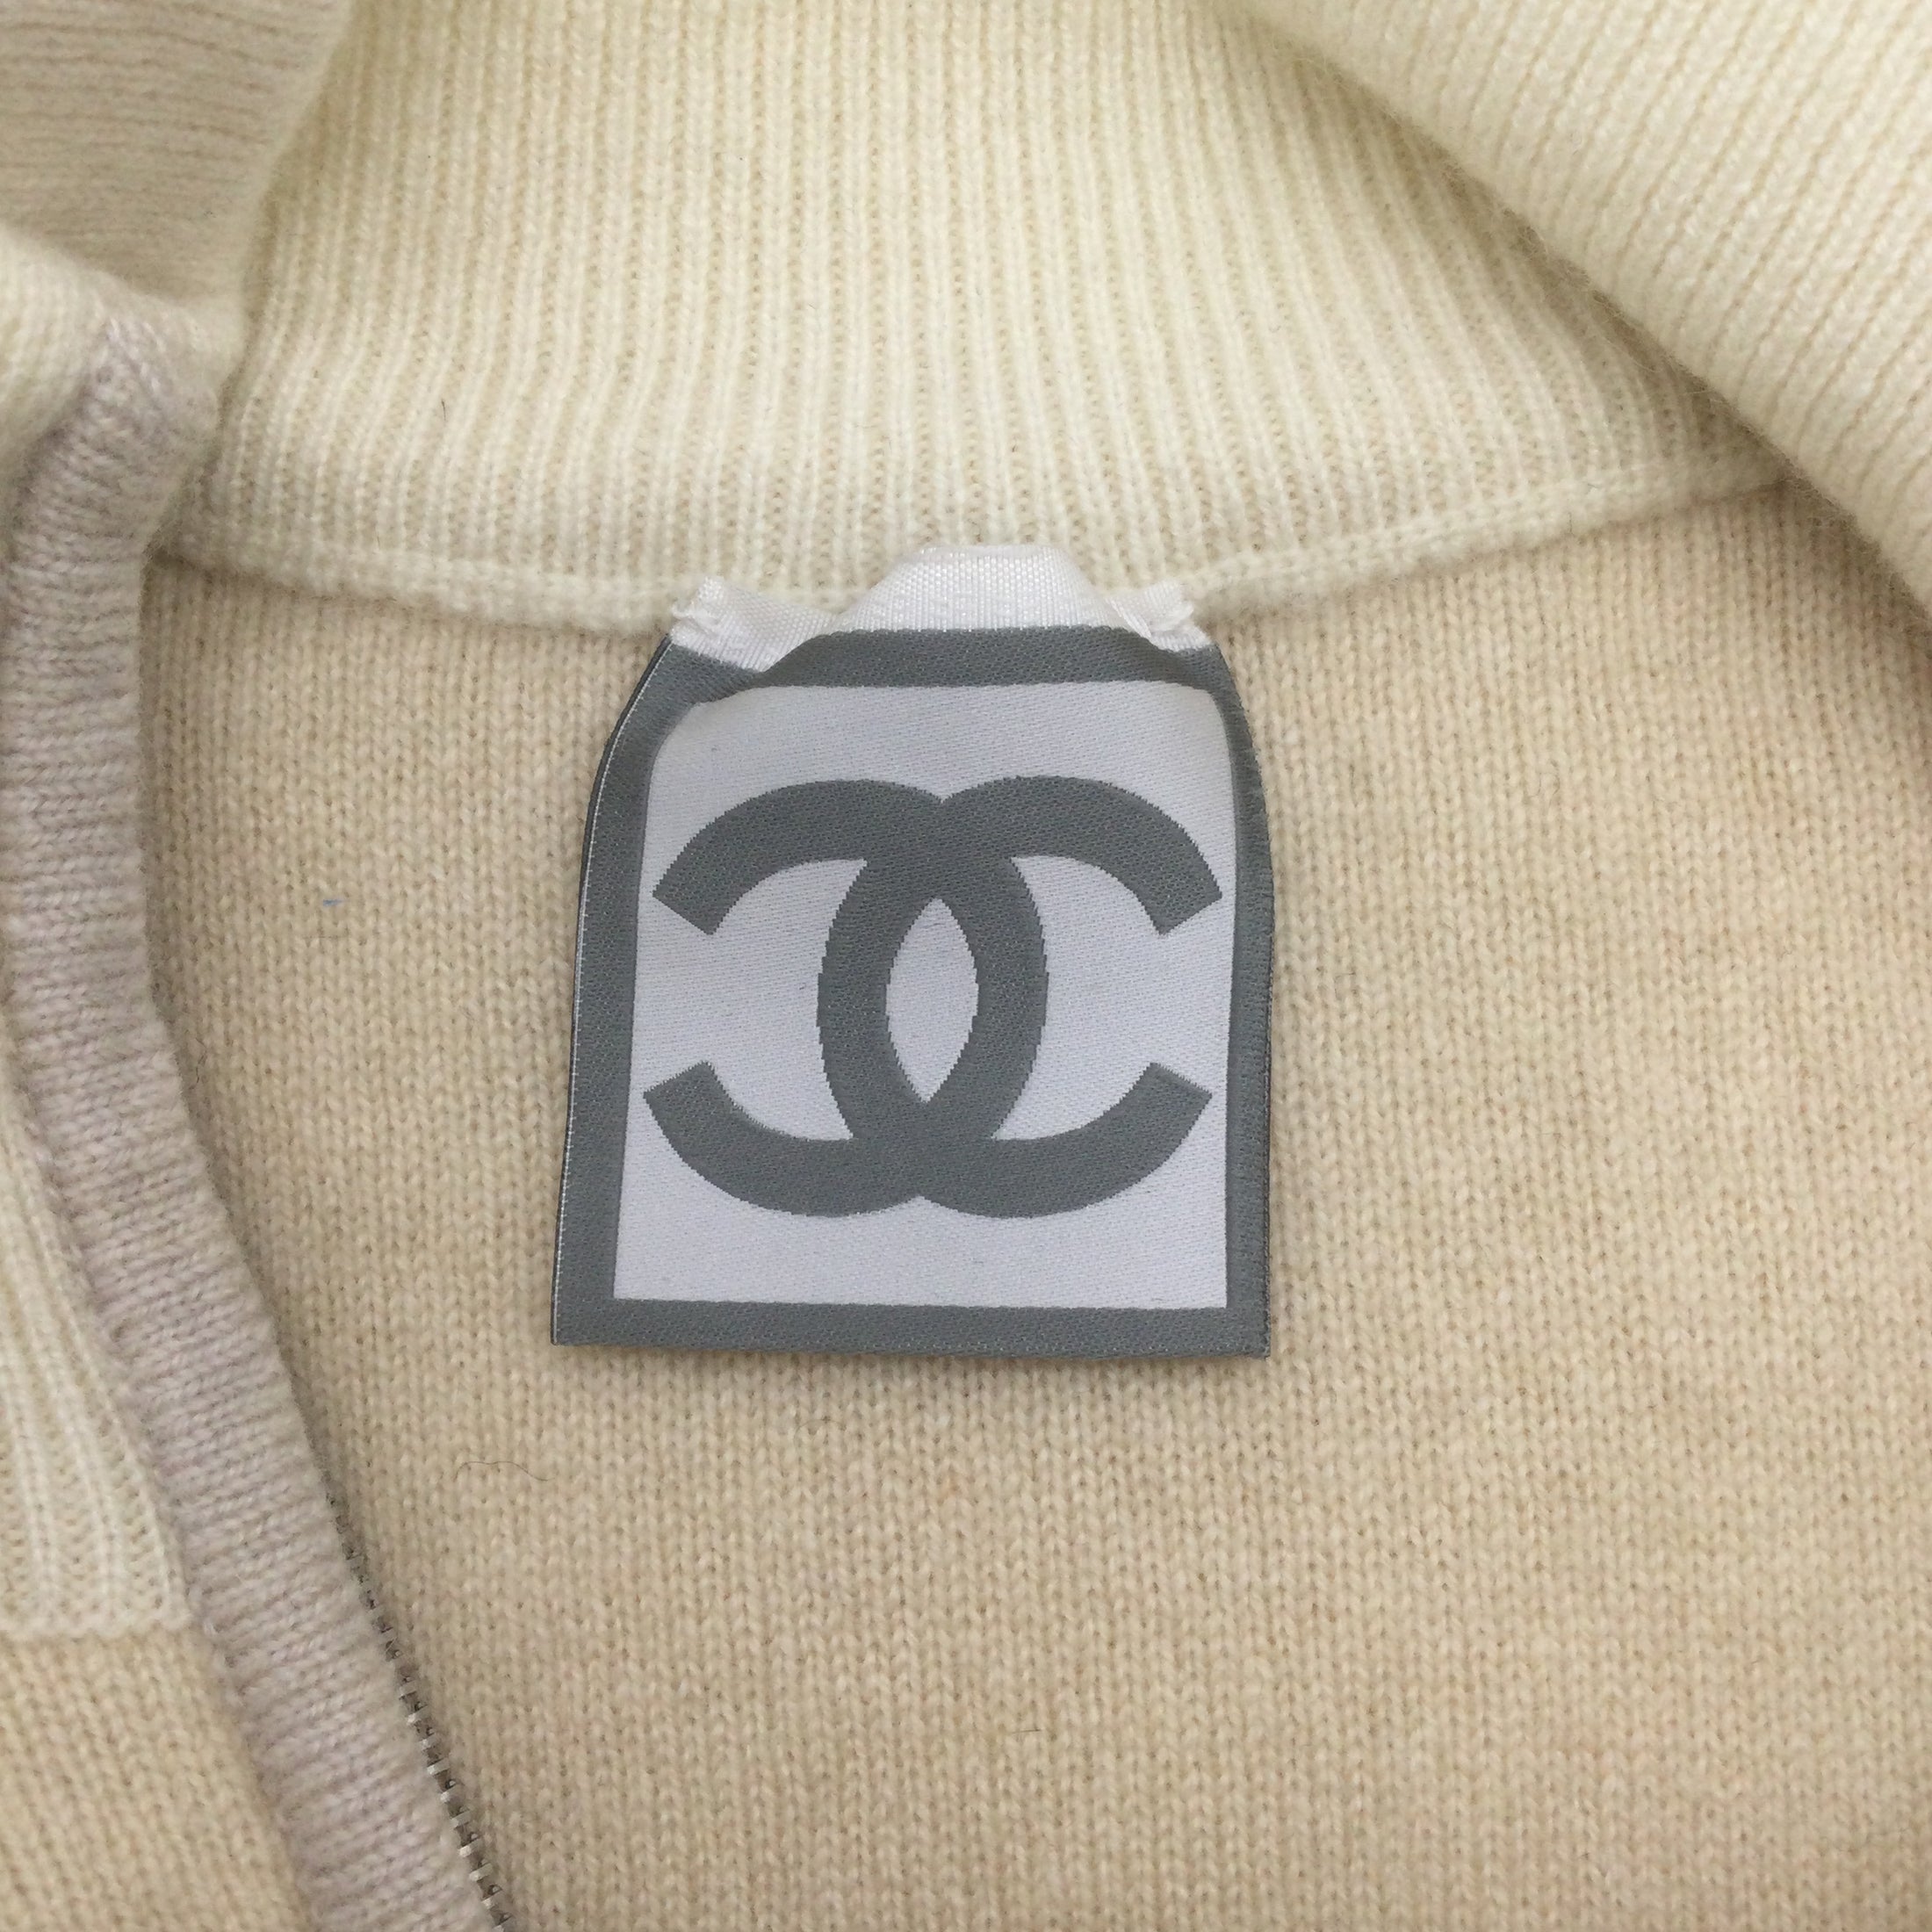 Chanel Sleeveless Zip Up Ivory/Beige Sweater